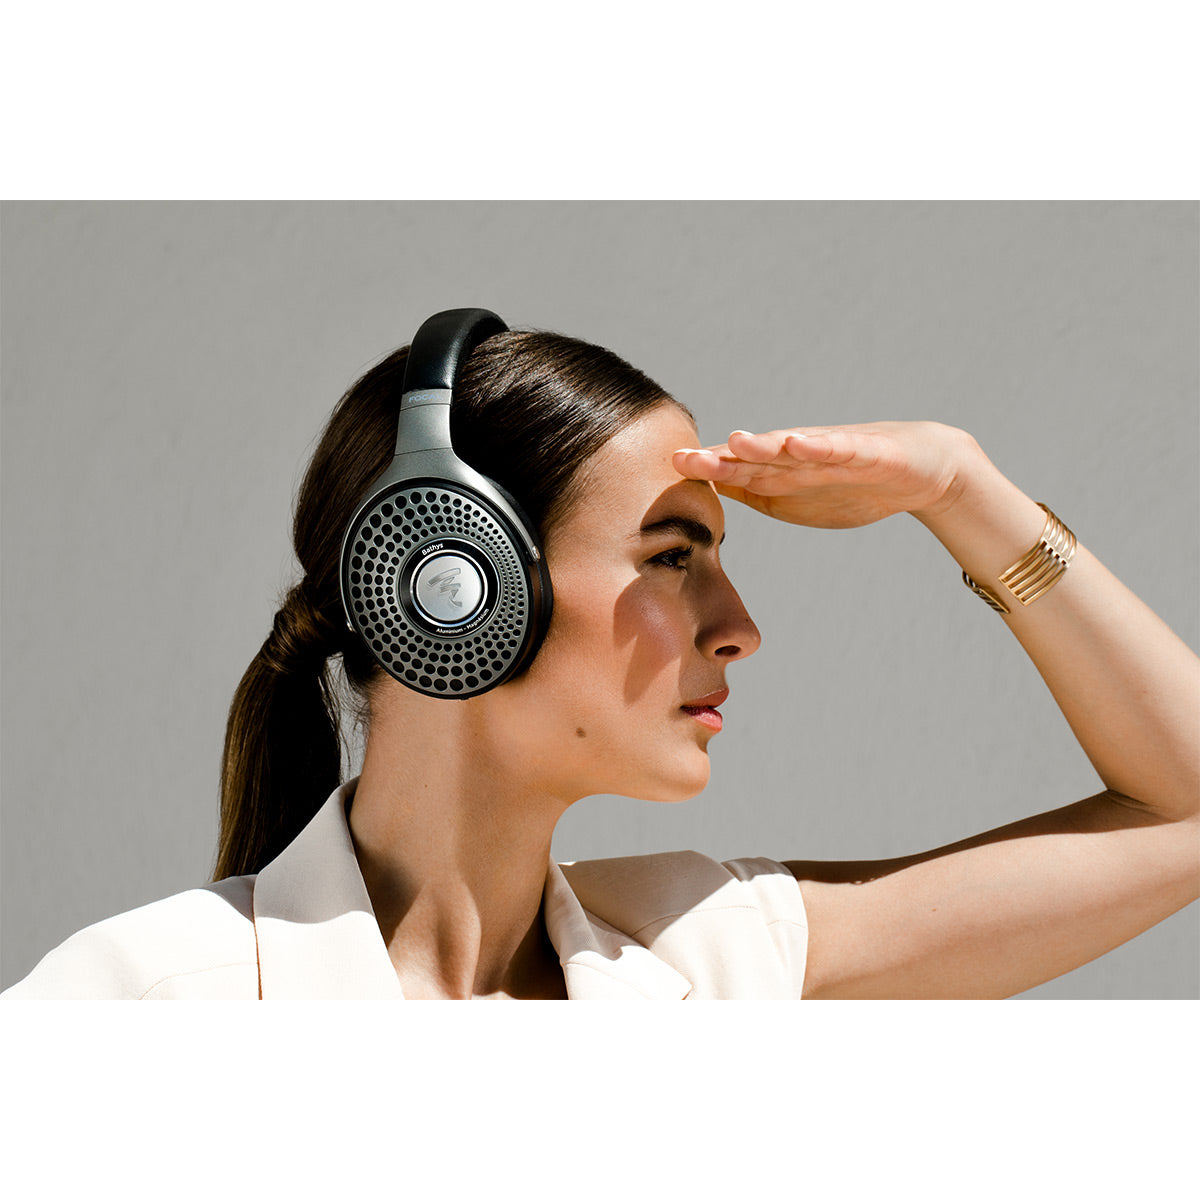 Focal Bathys Bluetooth Wireless Headphones with Active Noise Cancelation, Focal  Bathys Bluetooth Wireless Headphones with Active Noise Cancelation Review